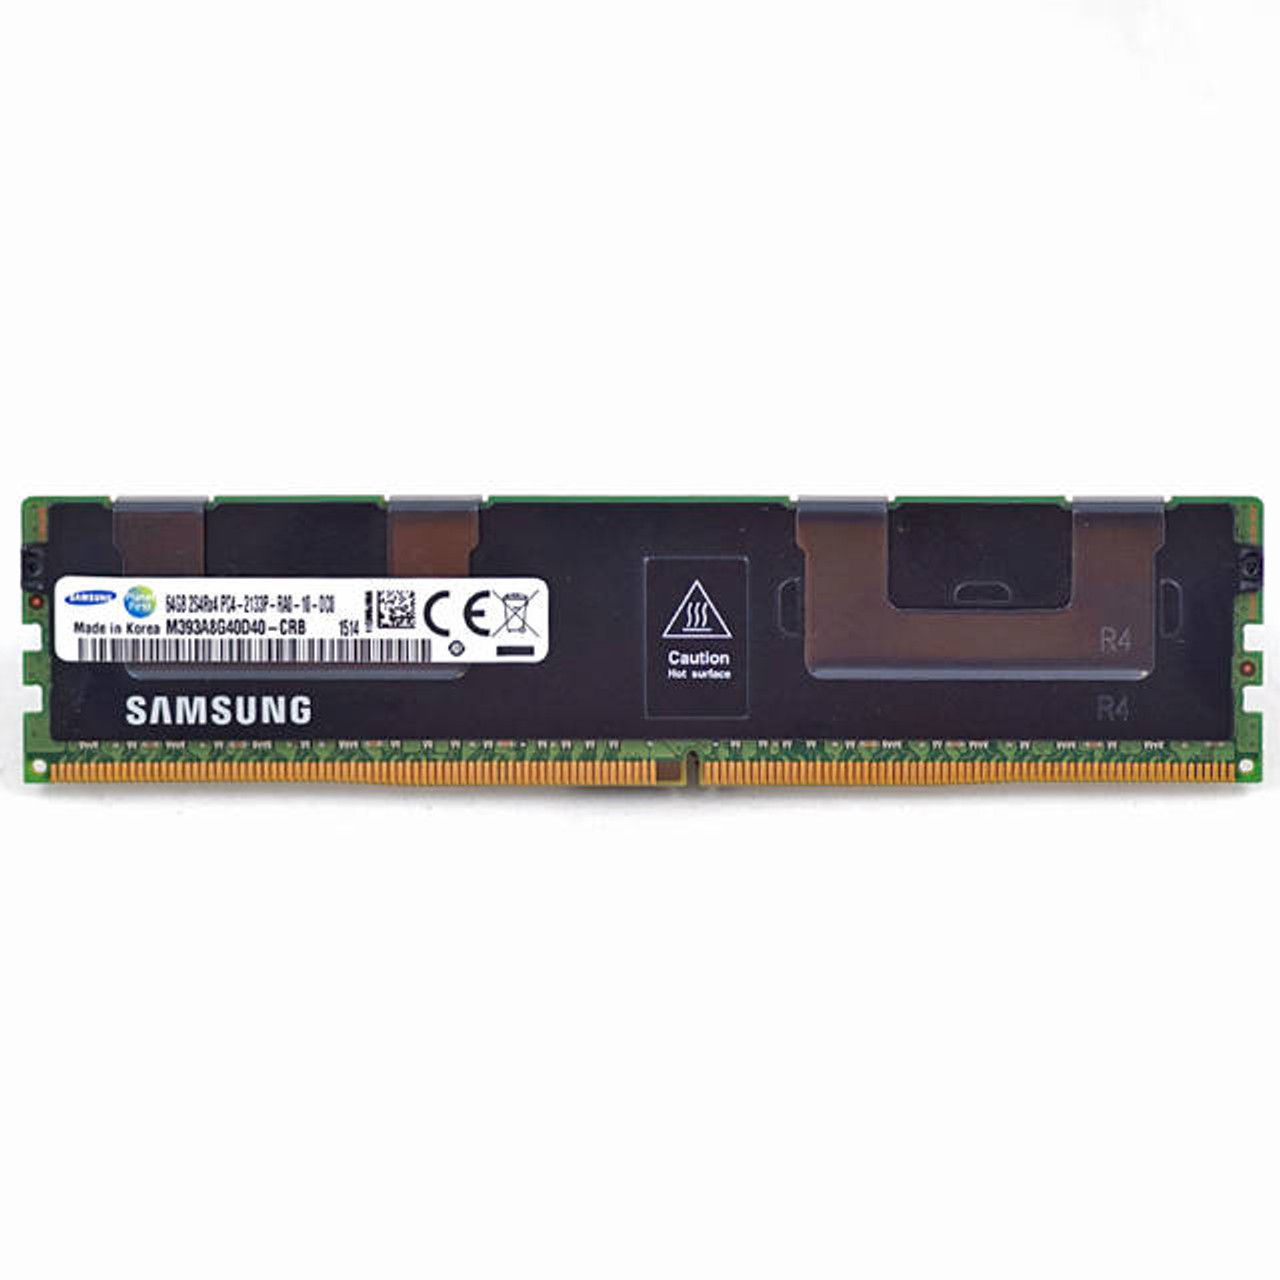 Samsung DDR4-2133 64GB/8Gx72 ECC/REG CL15 Server Memory